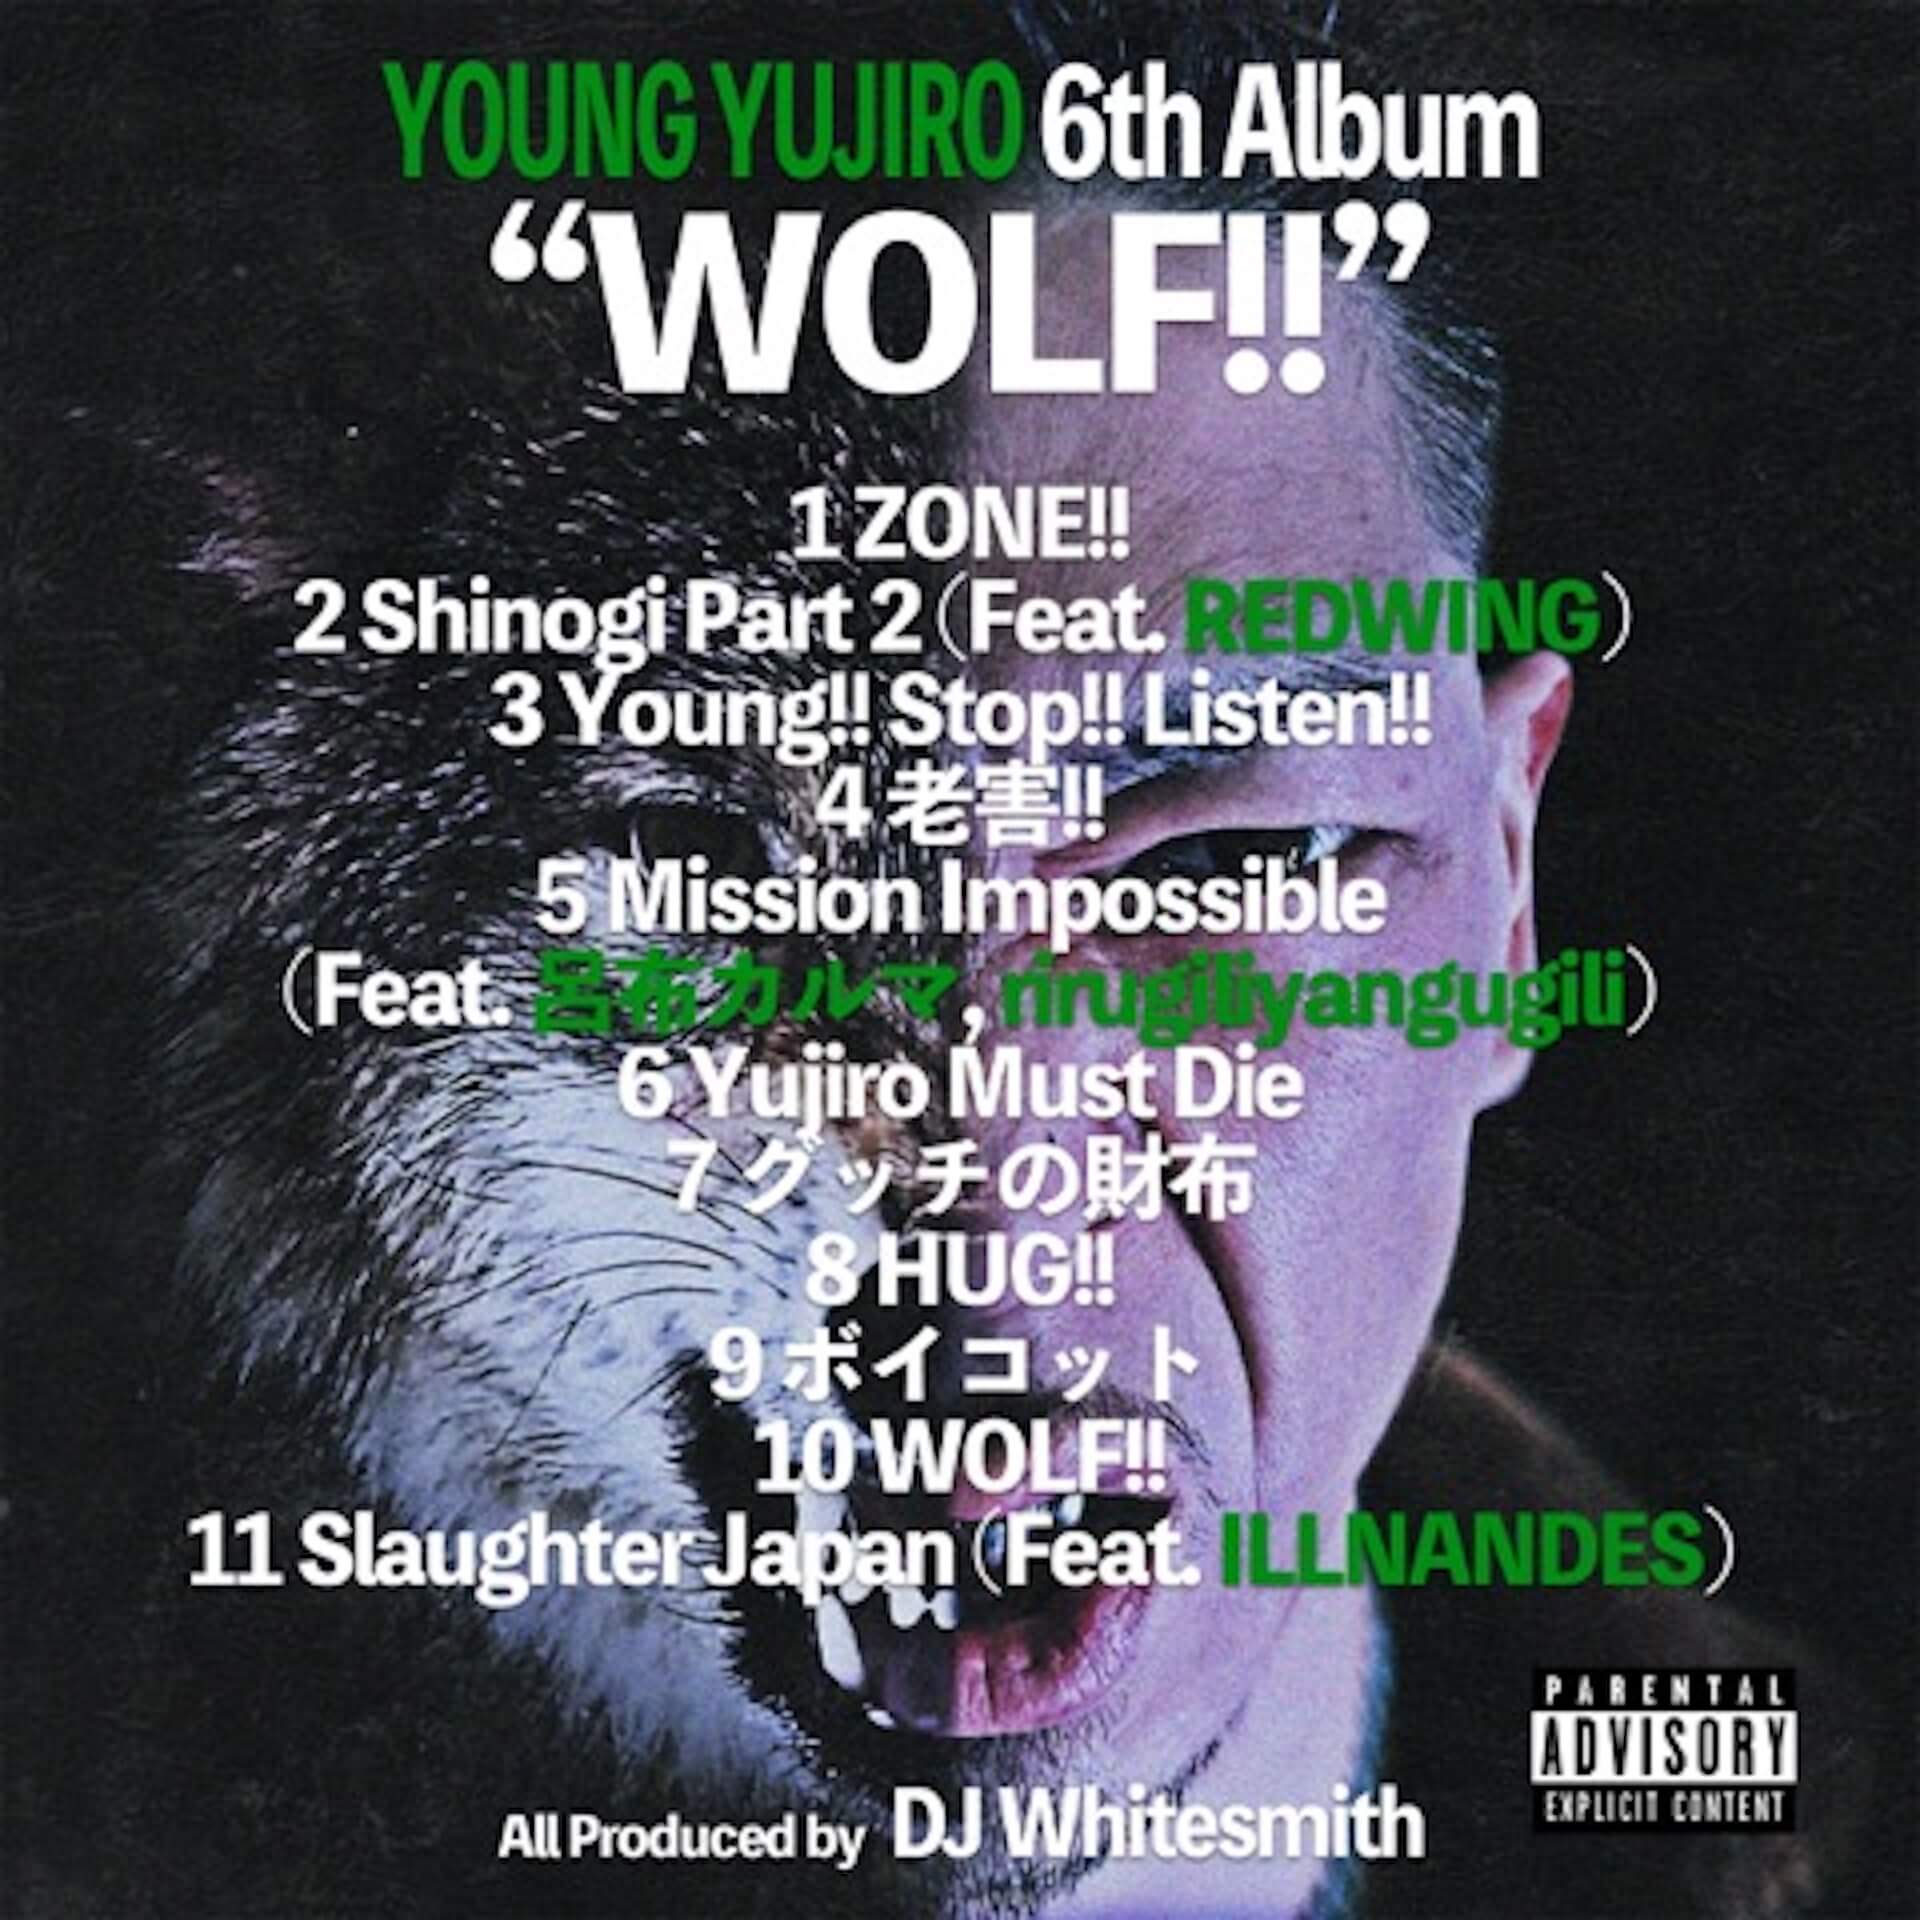 Young Yujiro、DJ Whitesmithをプロデューサーとして迎えた最新作『WOLF!!』をリリース｜呂布カルマ、rirugiliyangugili、REDWING、ILLNANDESらが参加 music230208-young-yujiro1